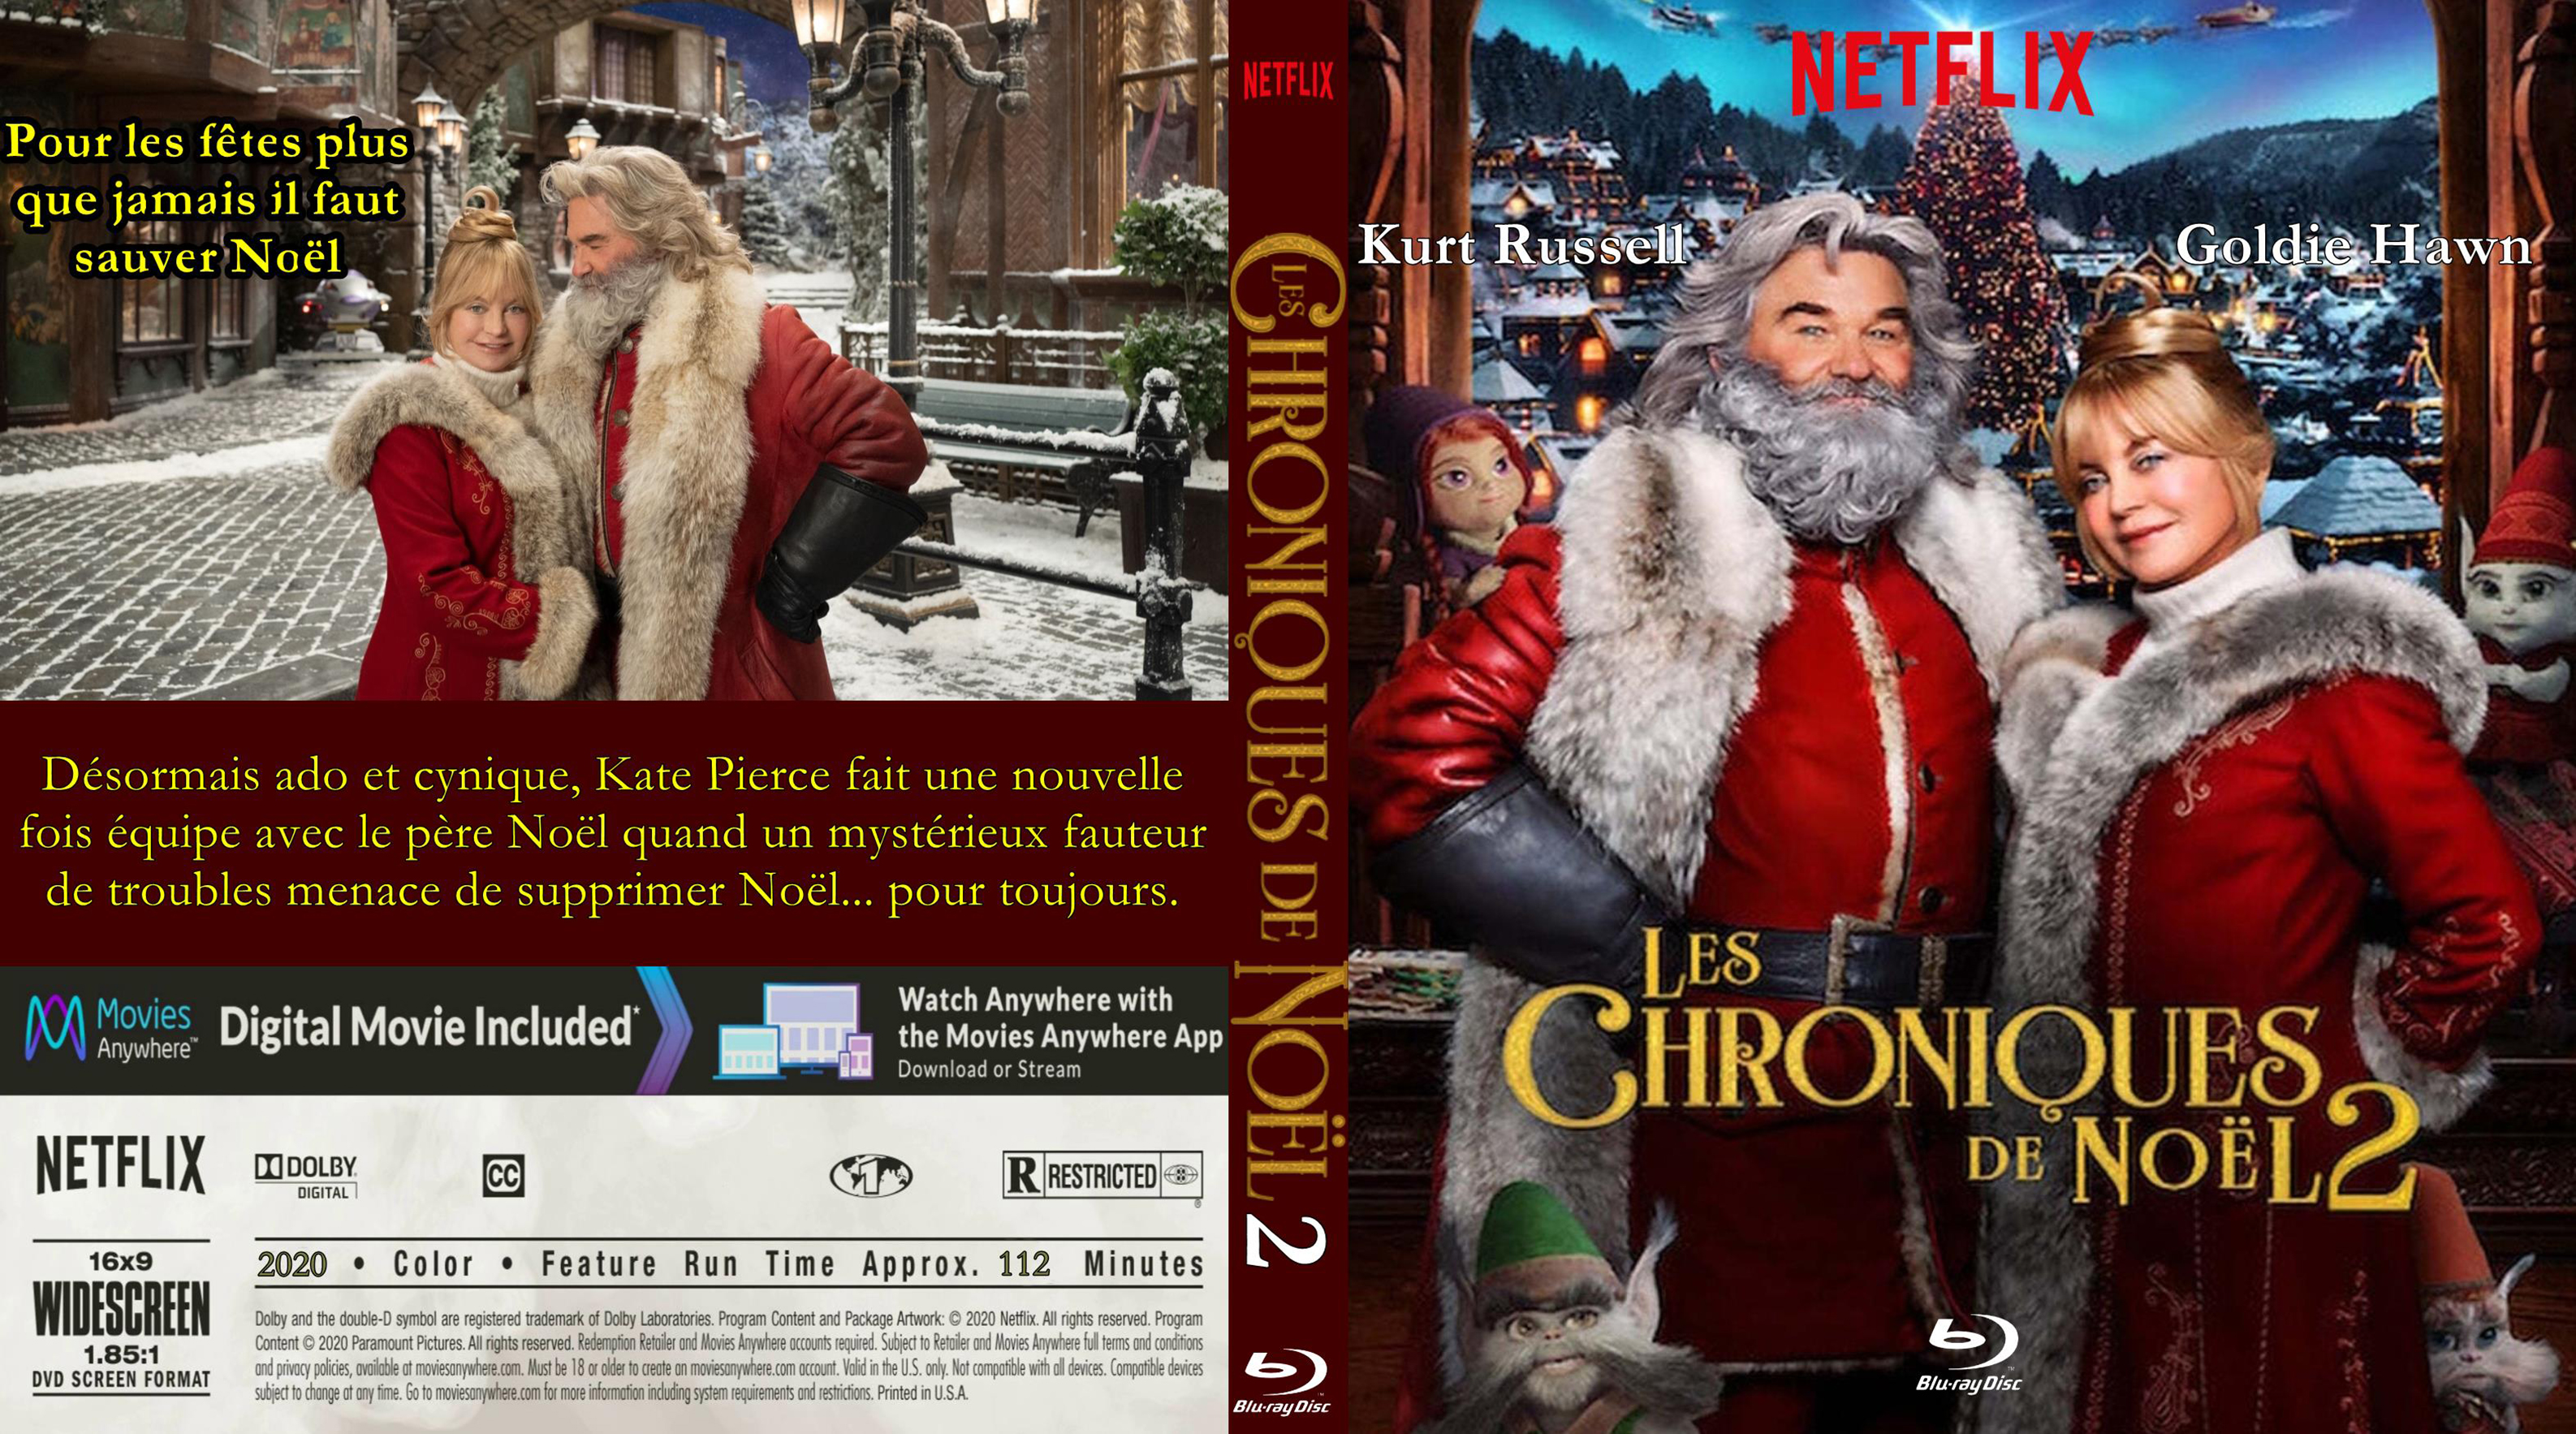 Jaquette DVD Les chroniques de noel 2 custom (BLU-RAY)